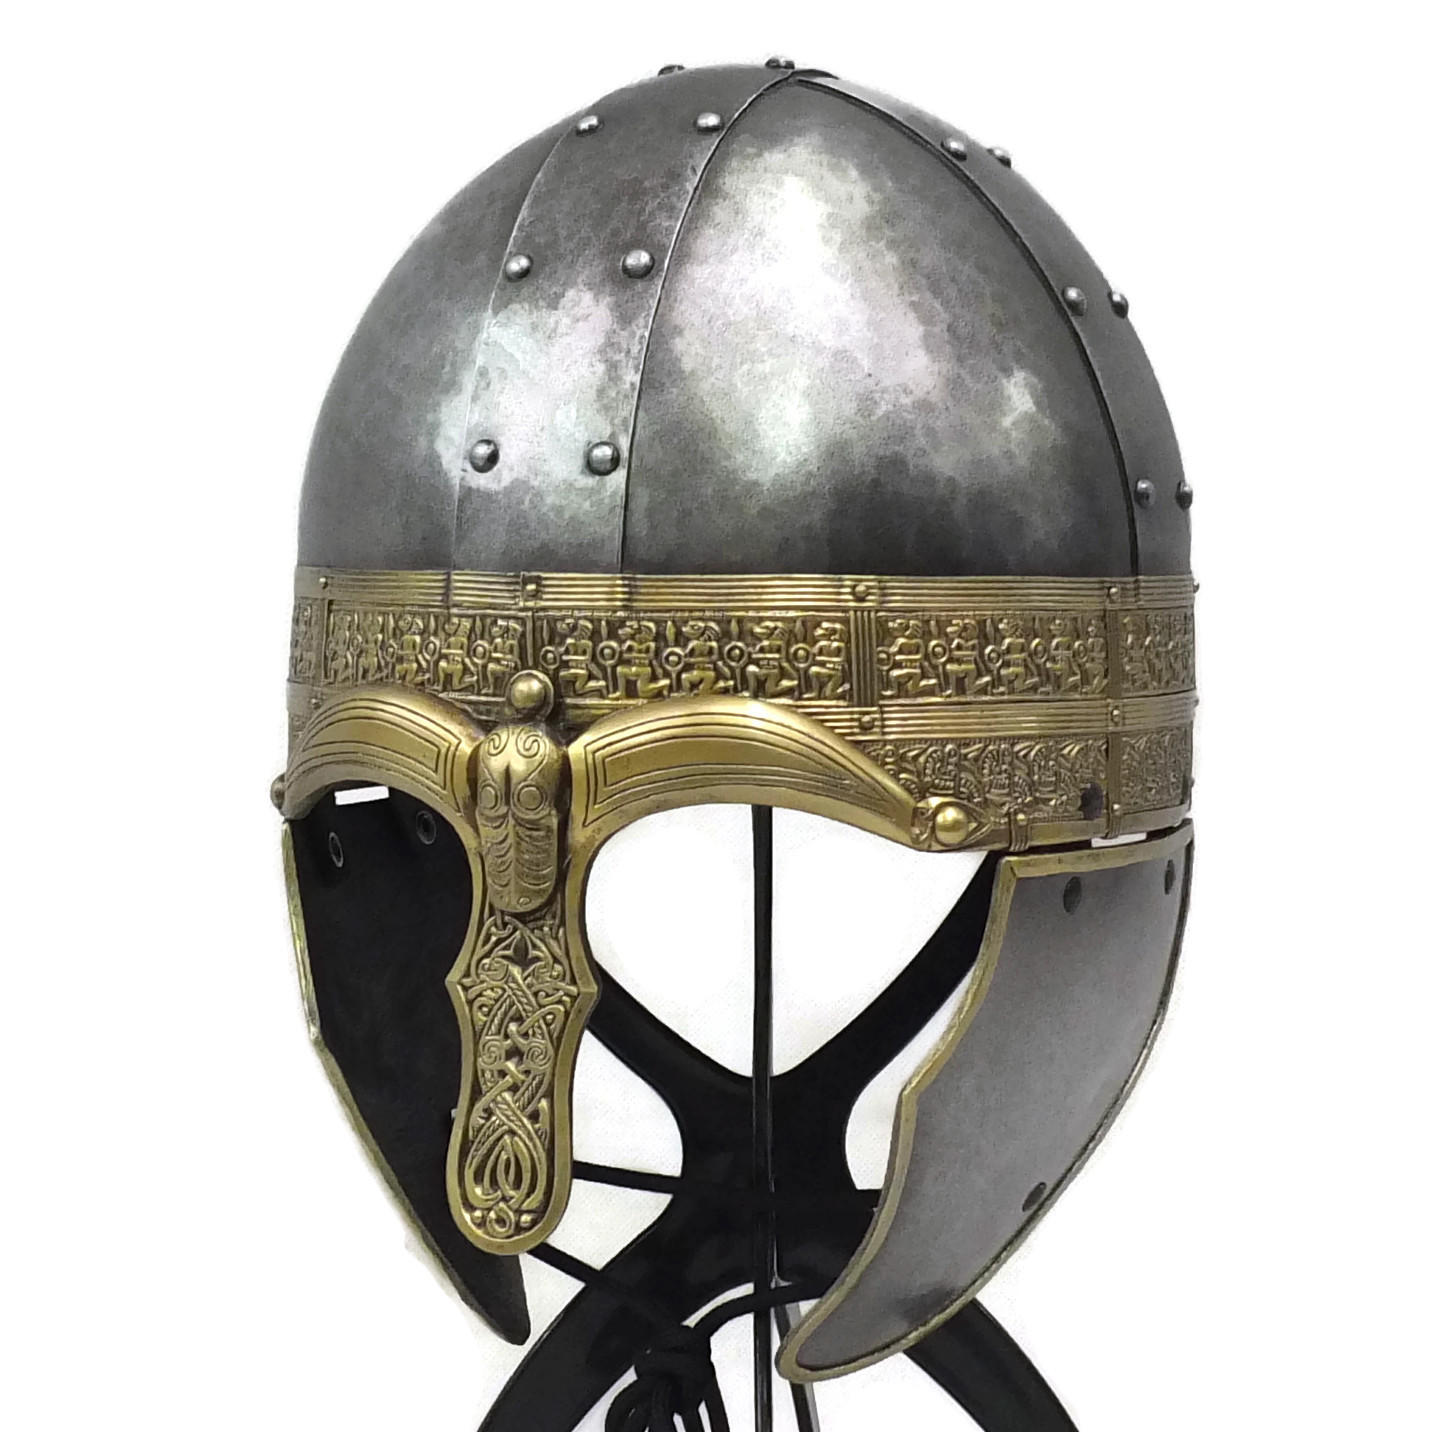 Staffordshire hoard design mercian spangehelm larp armour